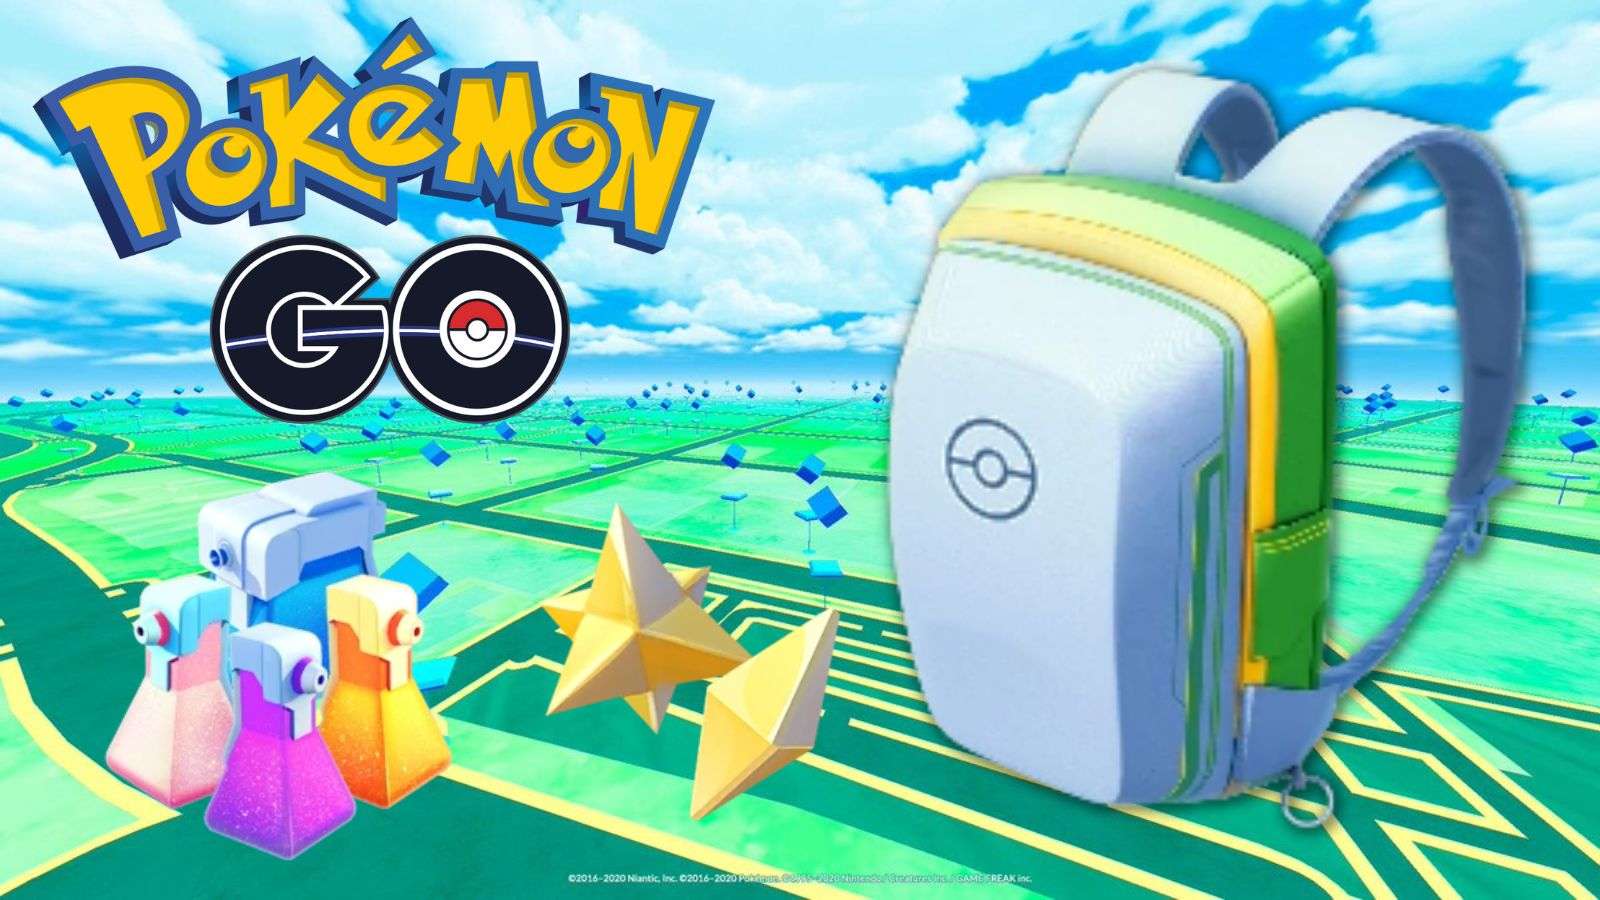 pokemon go item bag header image